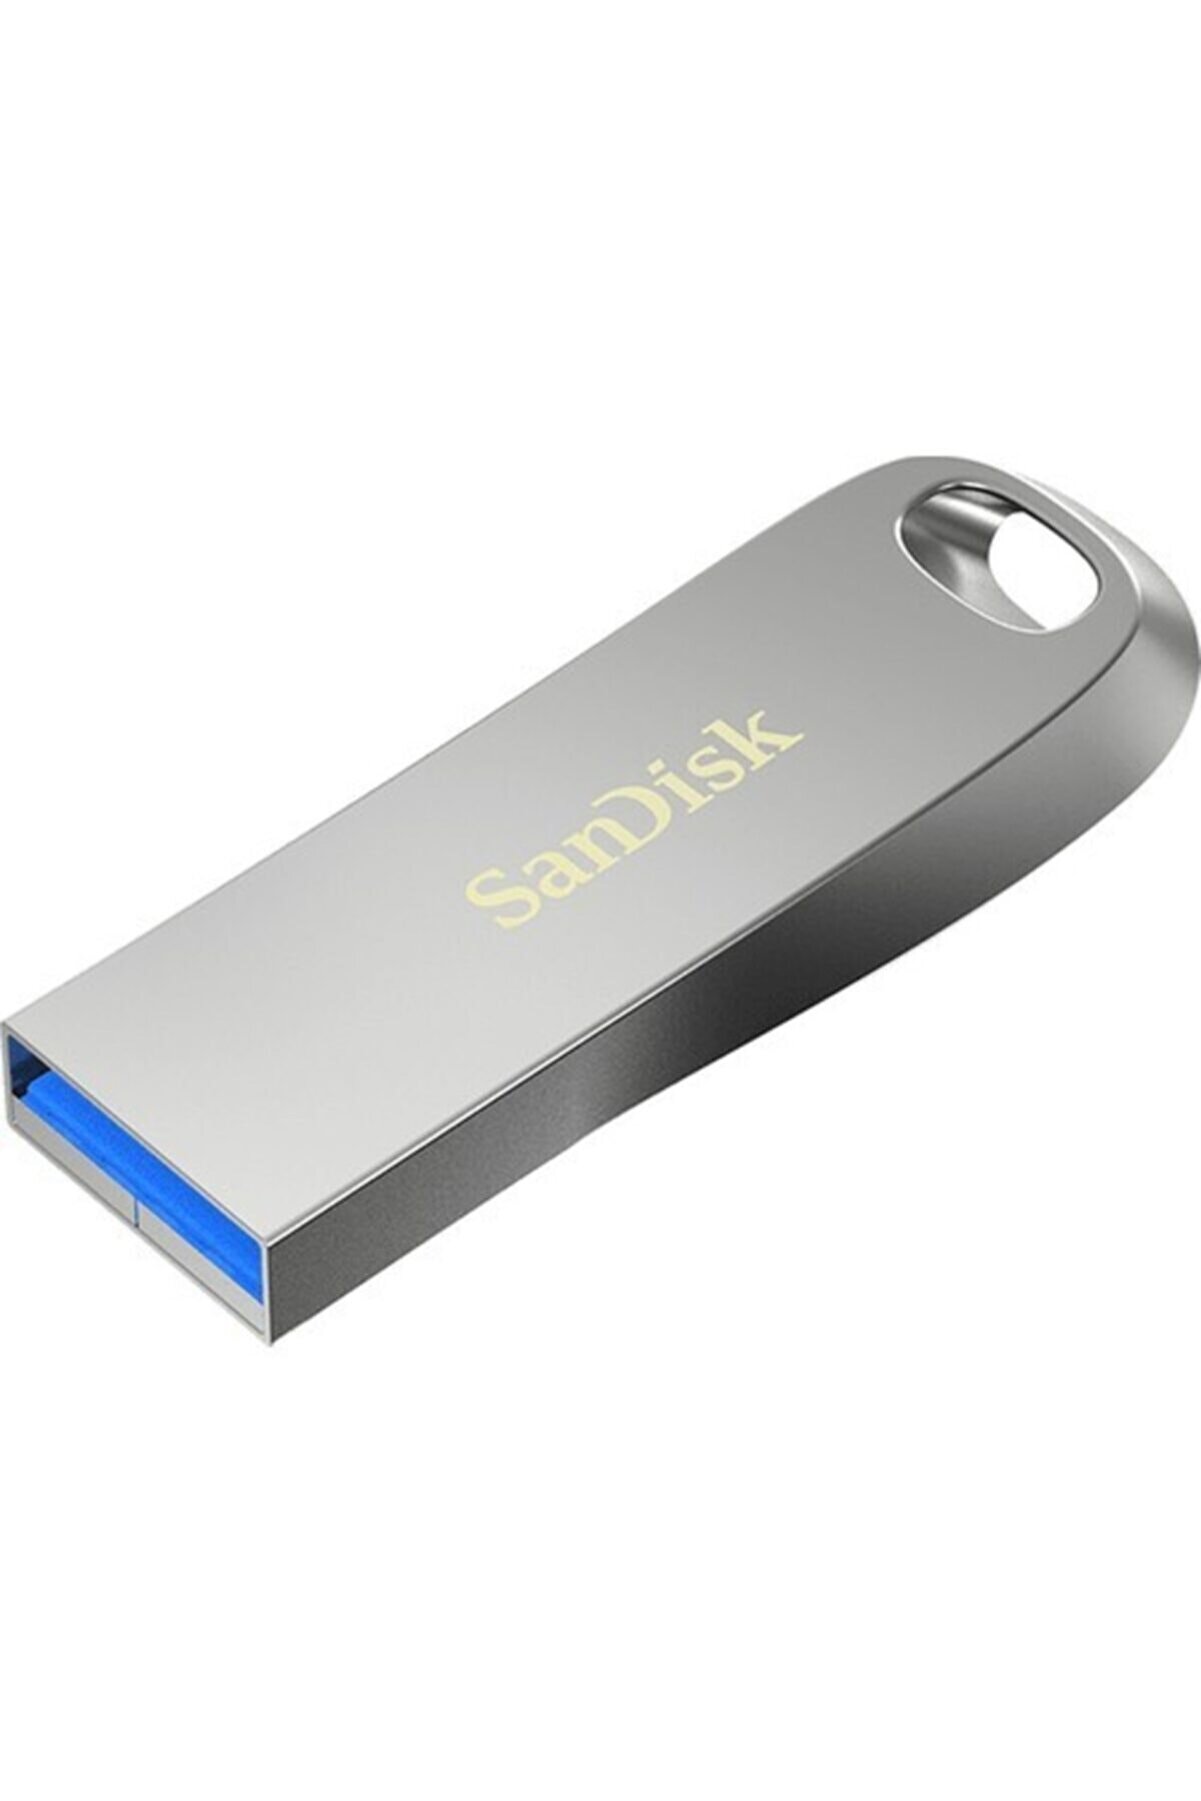 Sandisk Ultra Luxe Sdcz74-256g-g46 256gb Usb 3.1 Flash Bellek